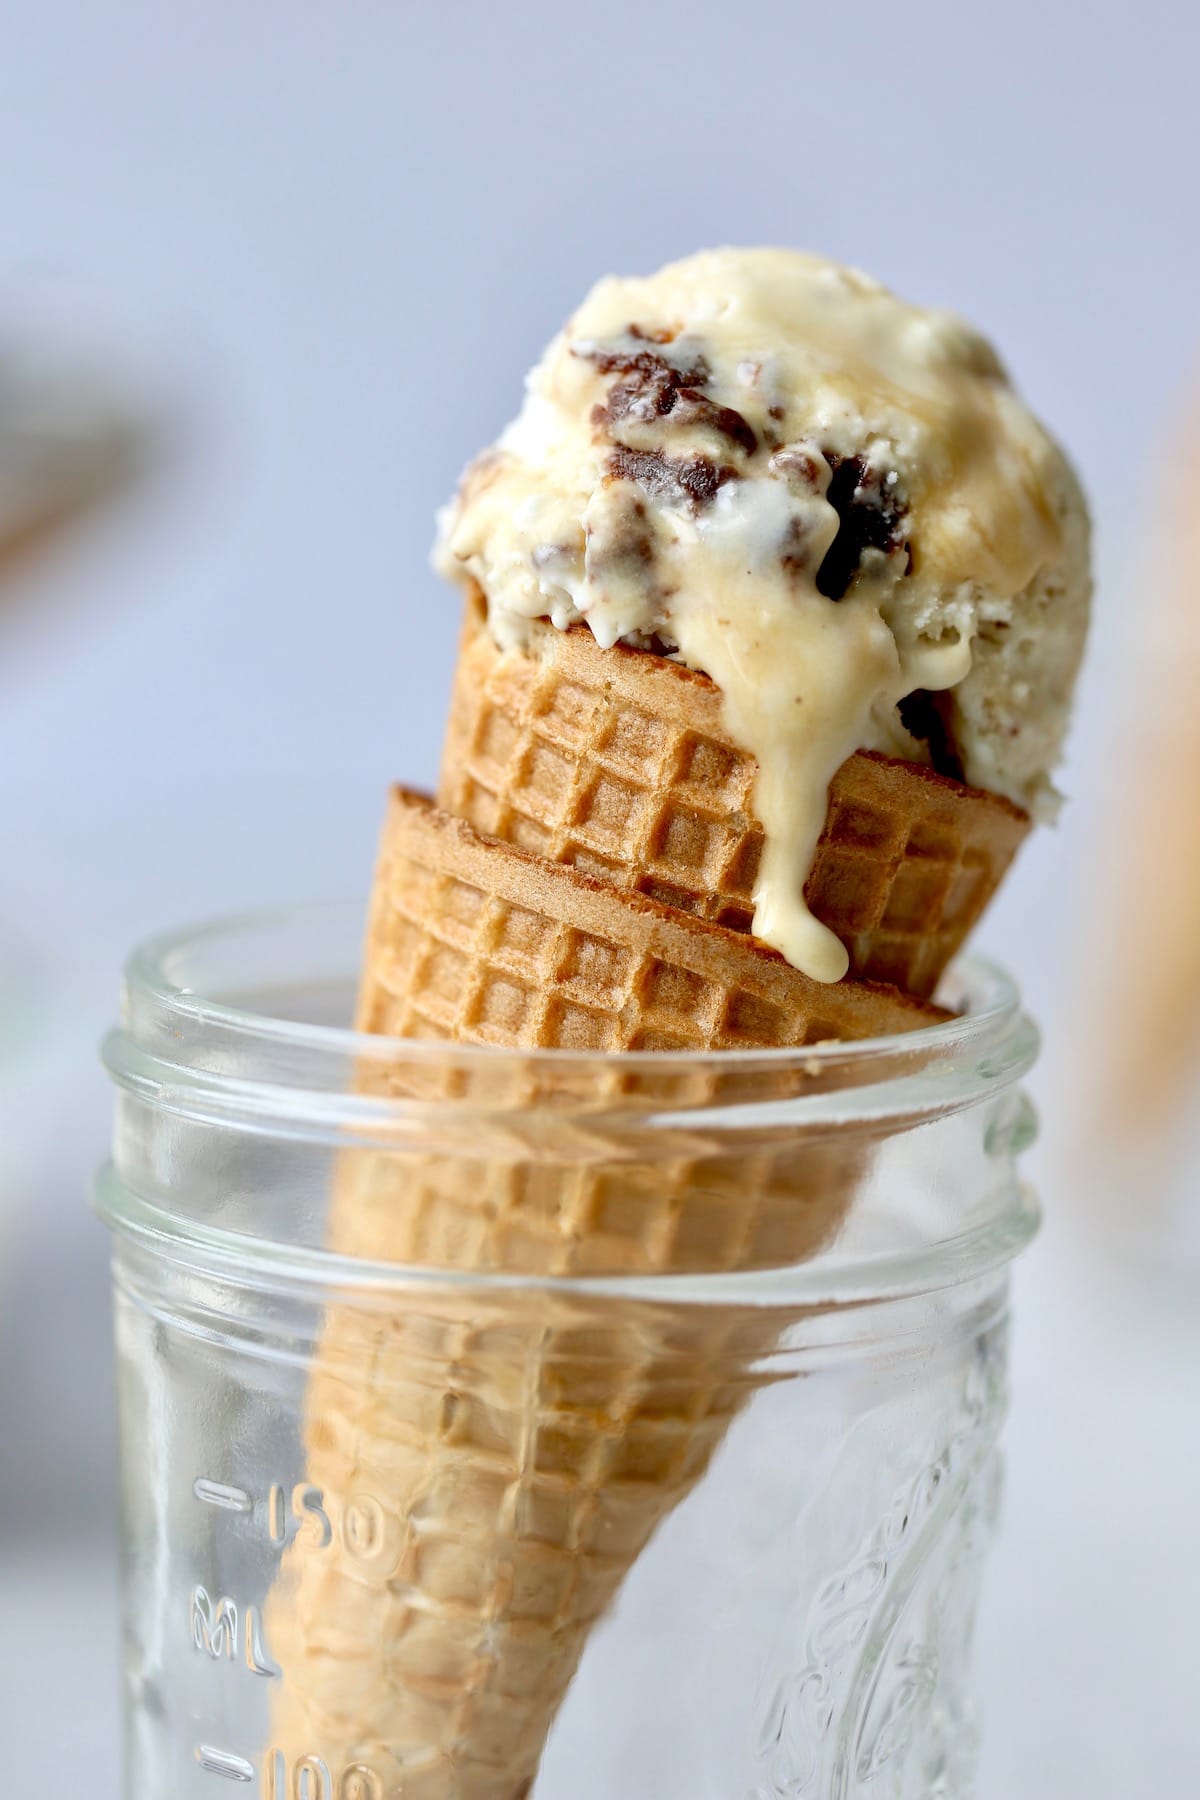 homemade vegan ice cream in a cone